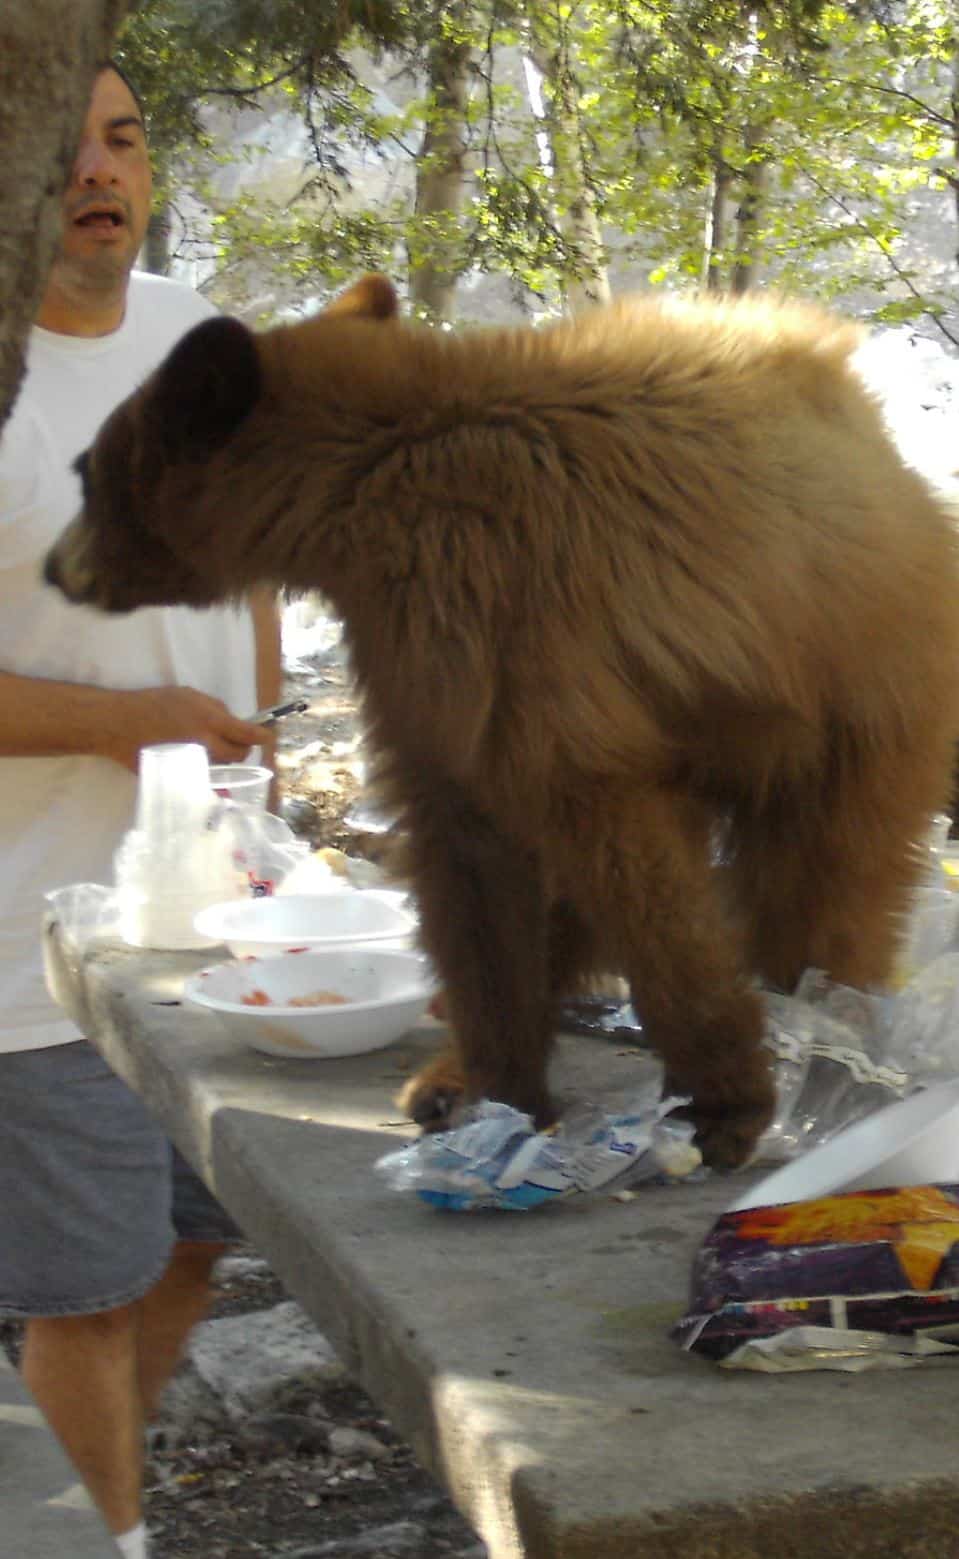 Bear Eating Food at Campsite